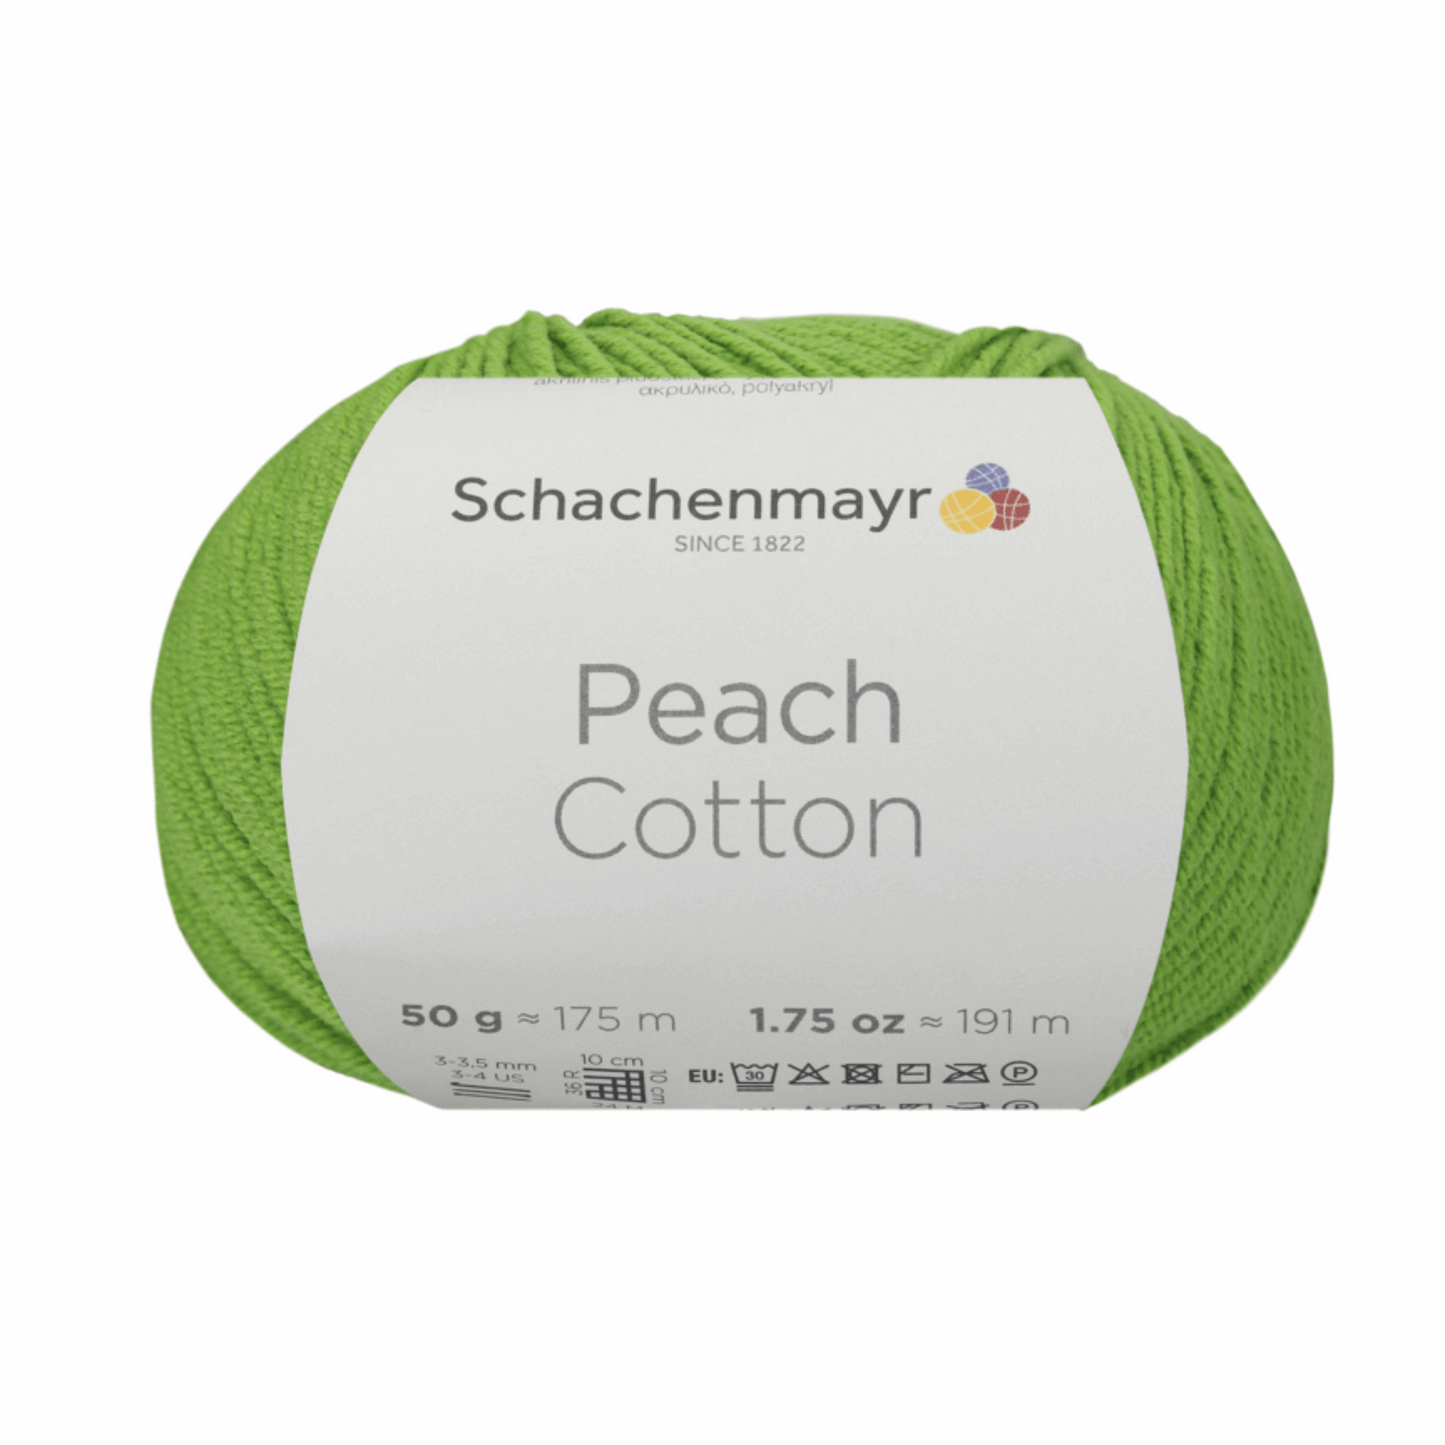 Peach Cotton 50g, 90371, Farbe 170, apple